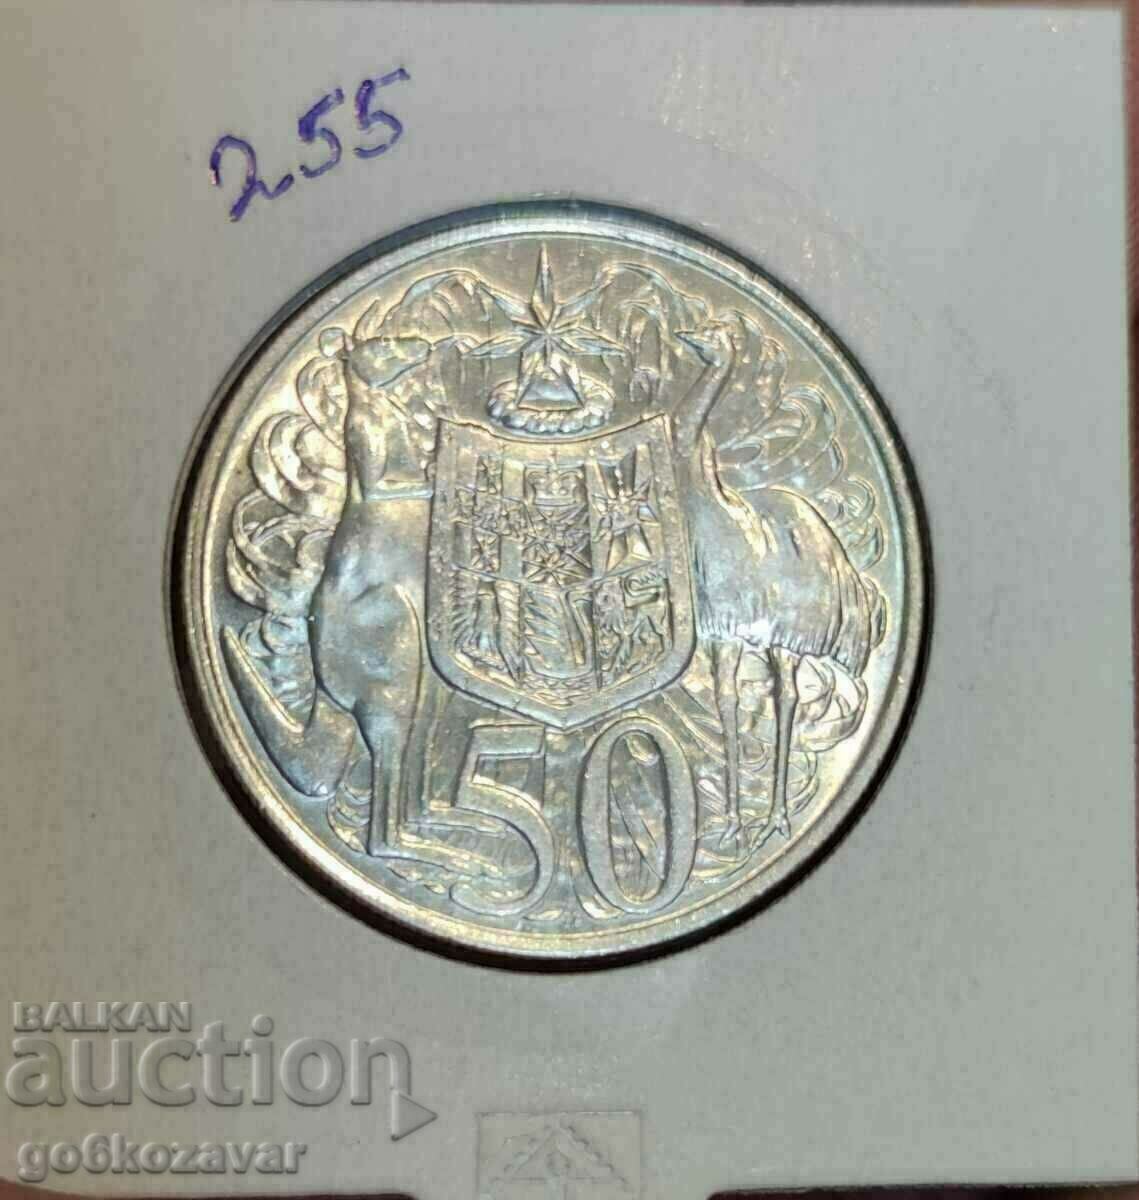 Australia 50 de cenți 1966 Argint!